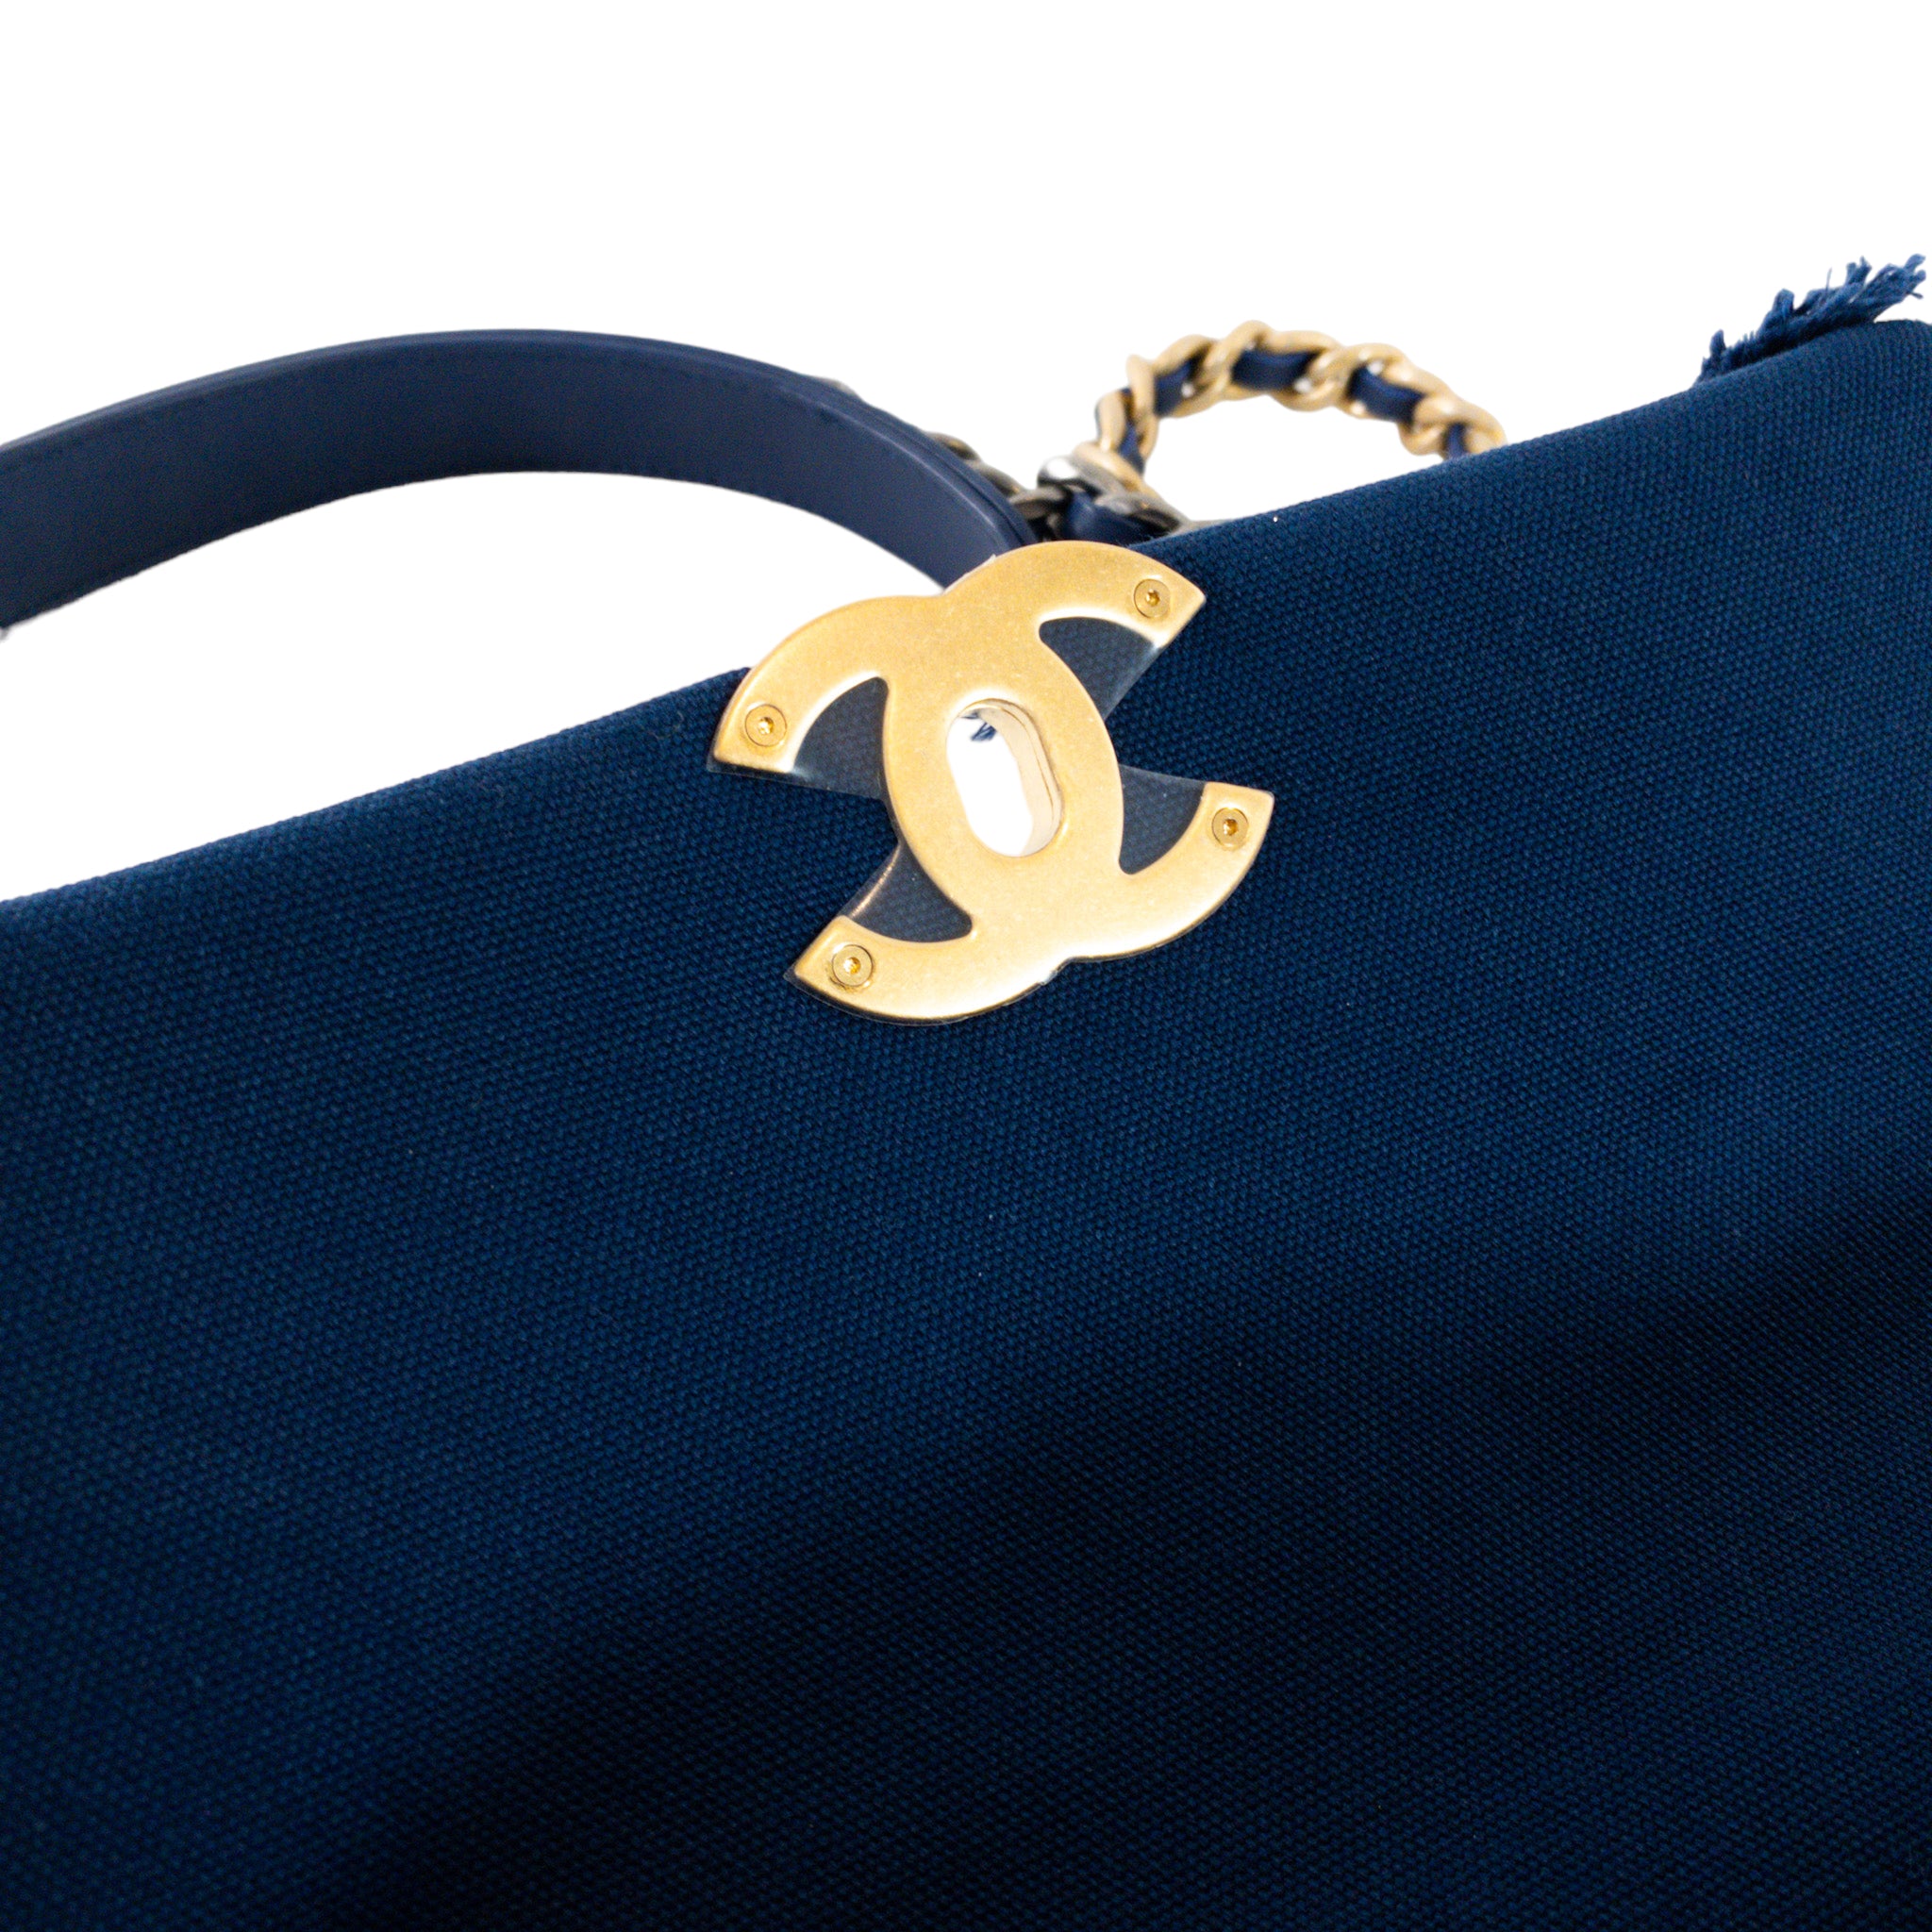 Chanel 19 Shoulder Bag in Navy Blue Jersey Canvas